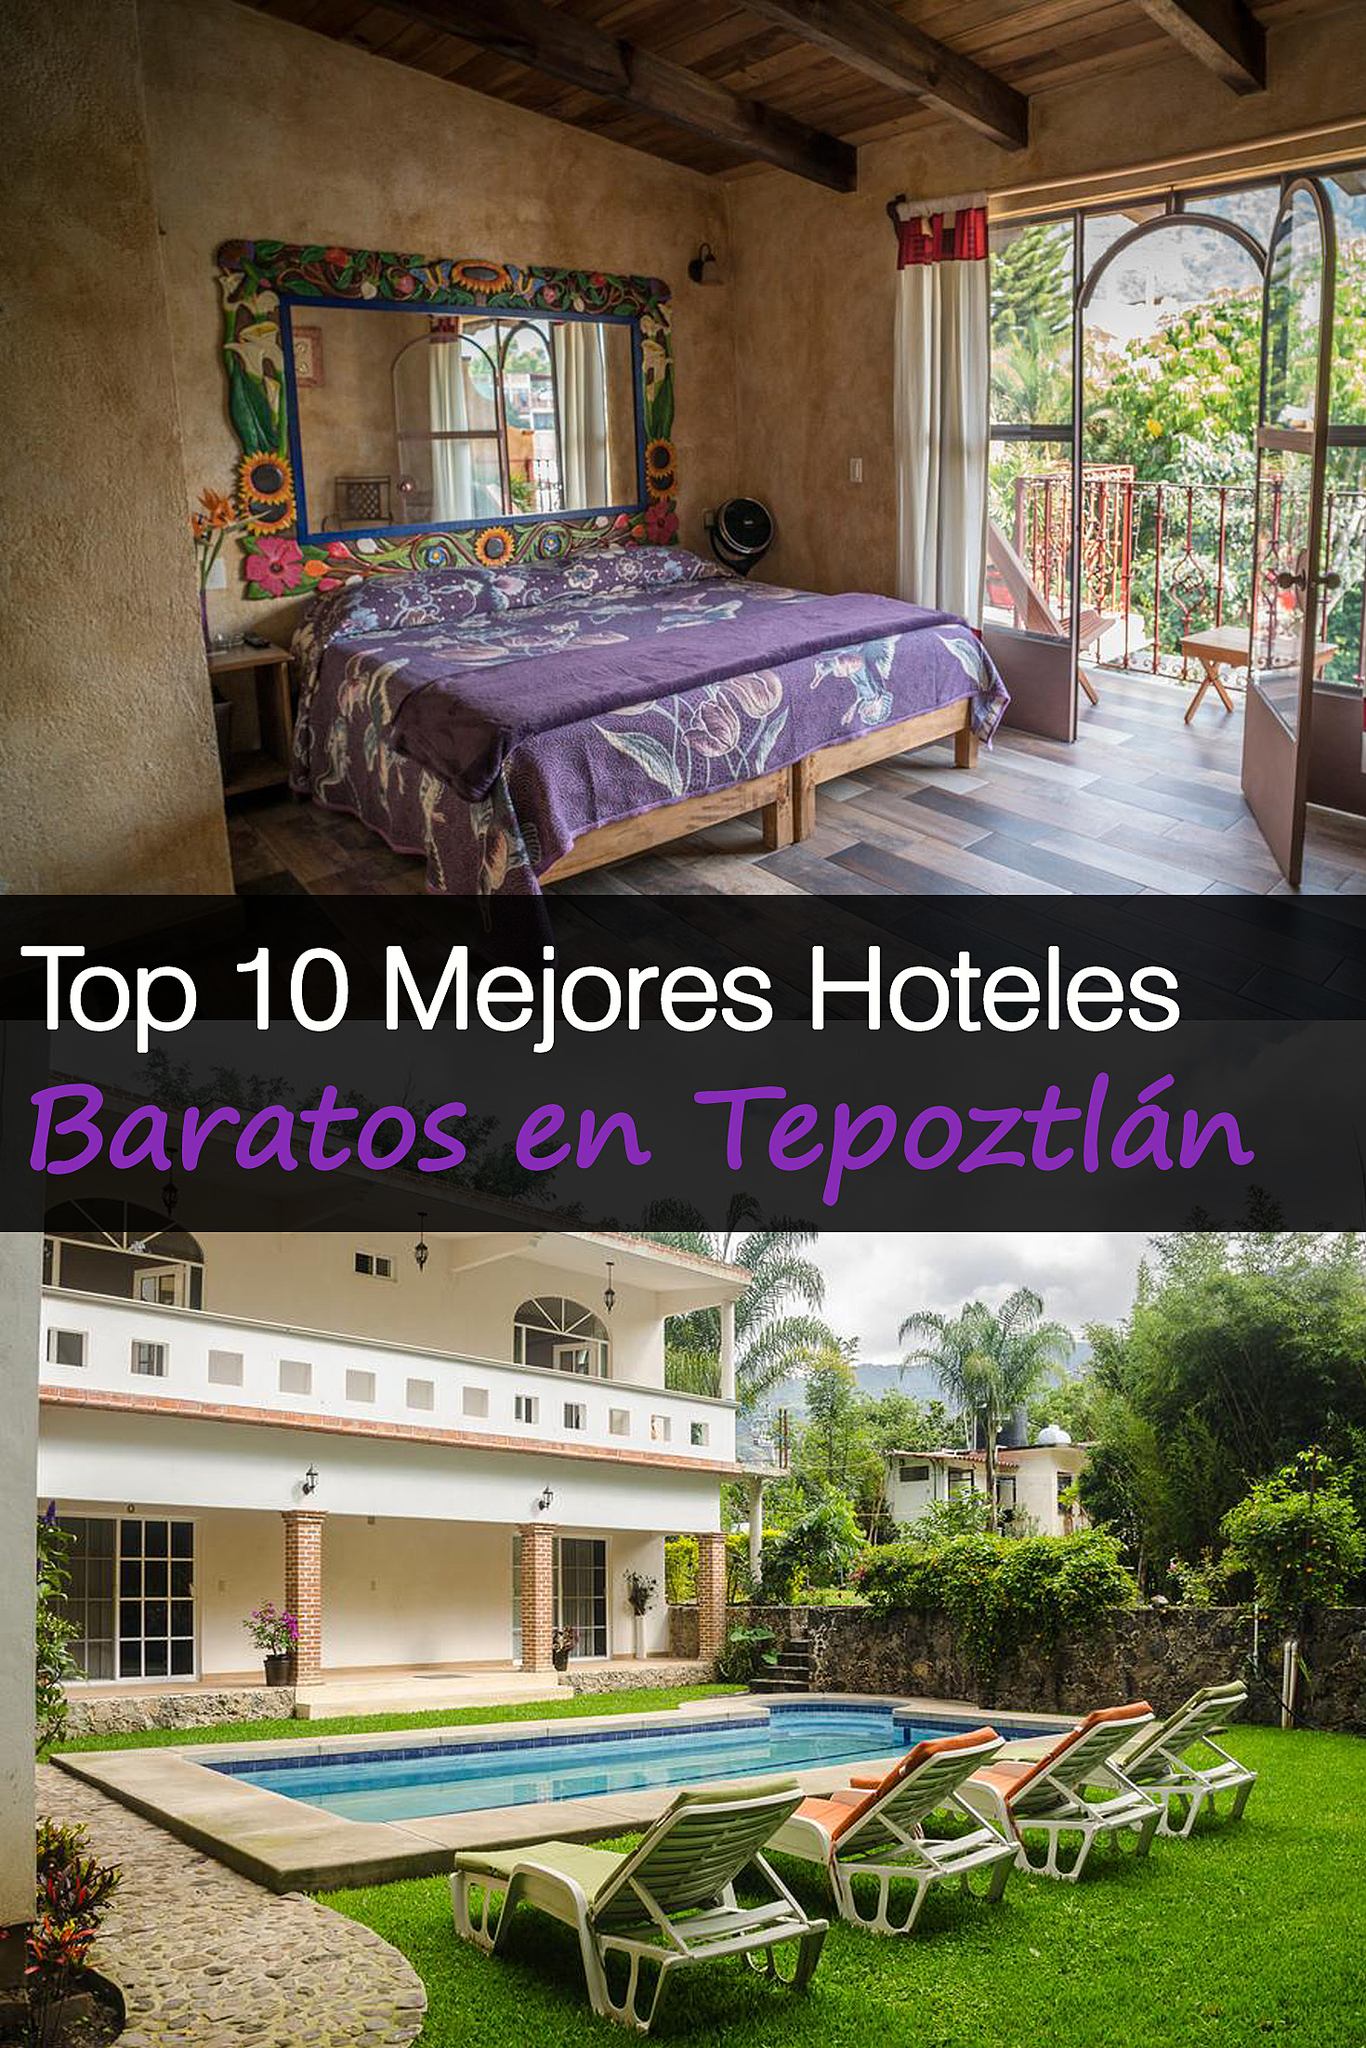 Los Top 10 Mejores Hoteles Baratos en Tepoztlán, México